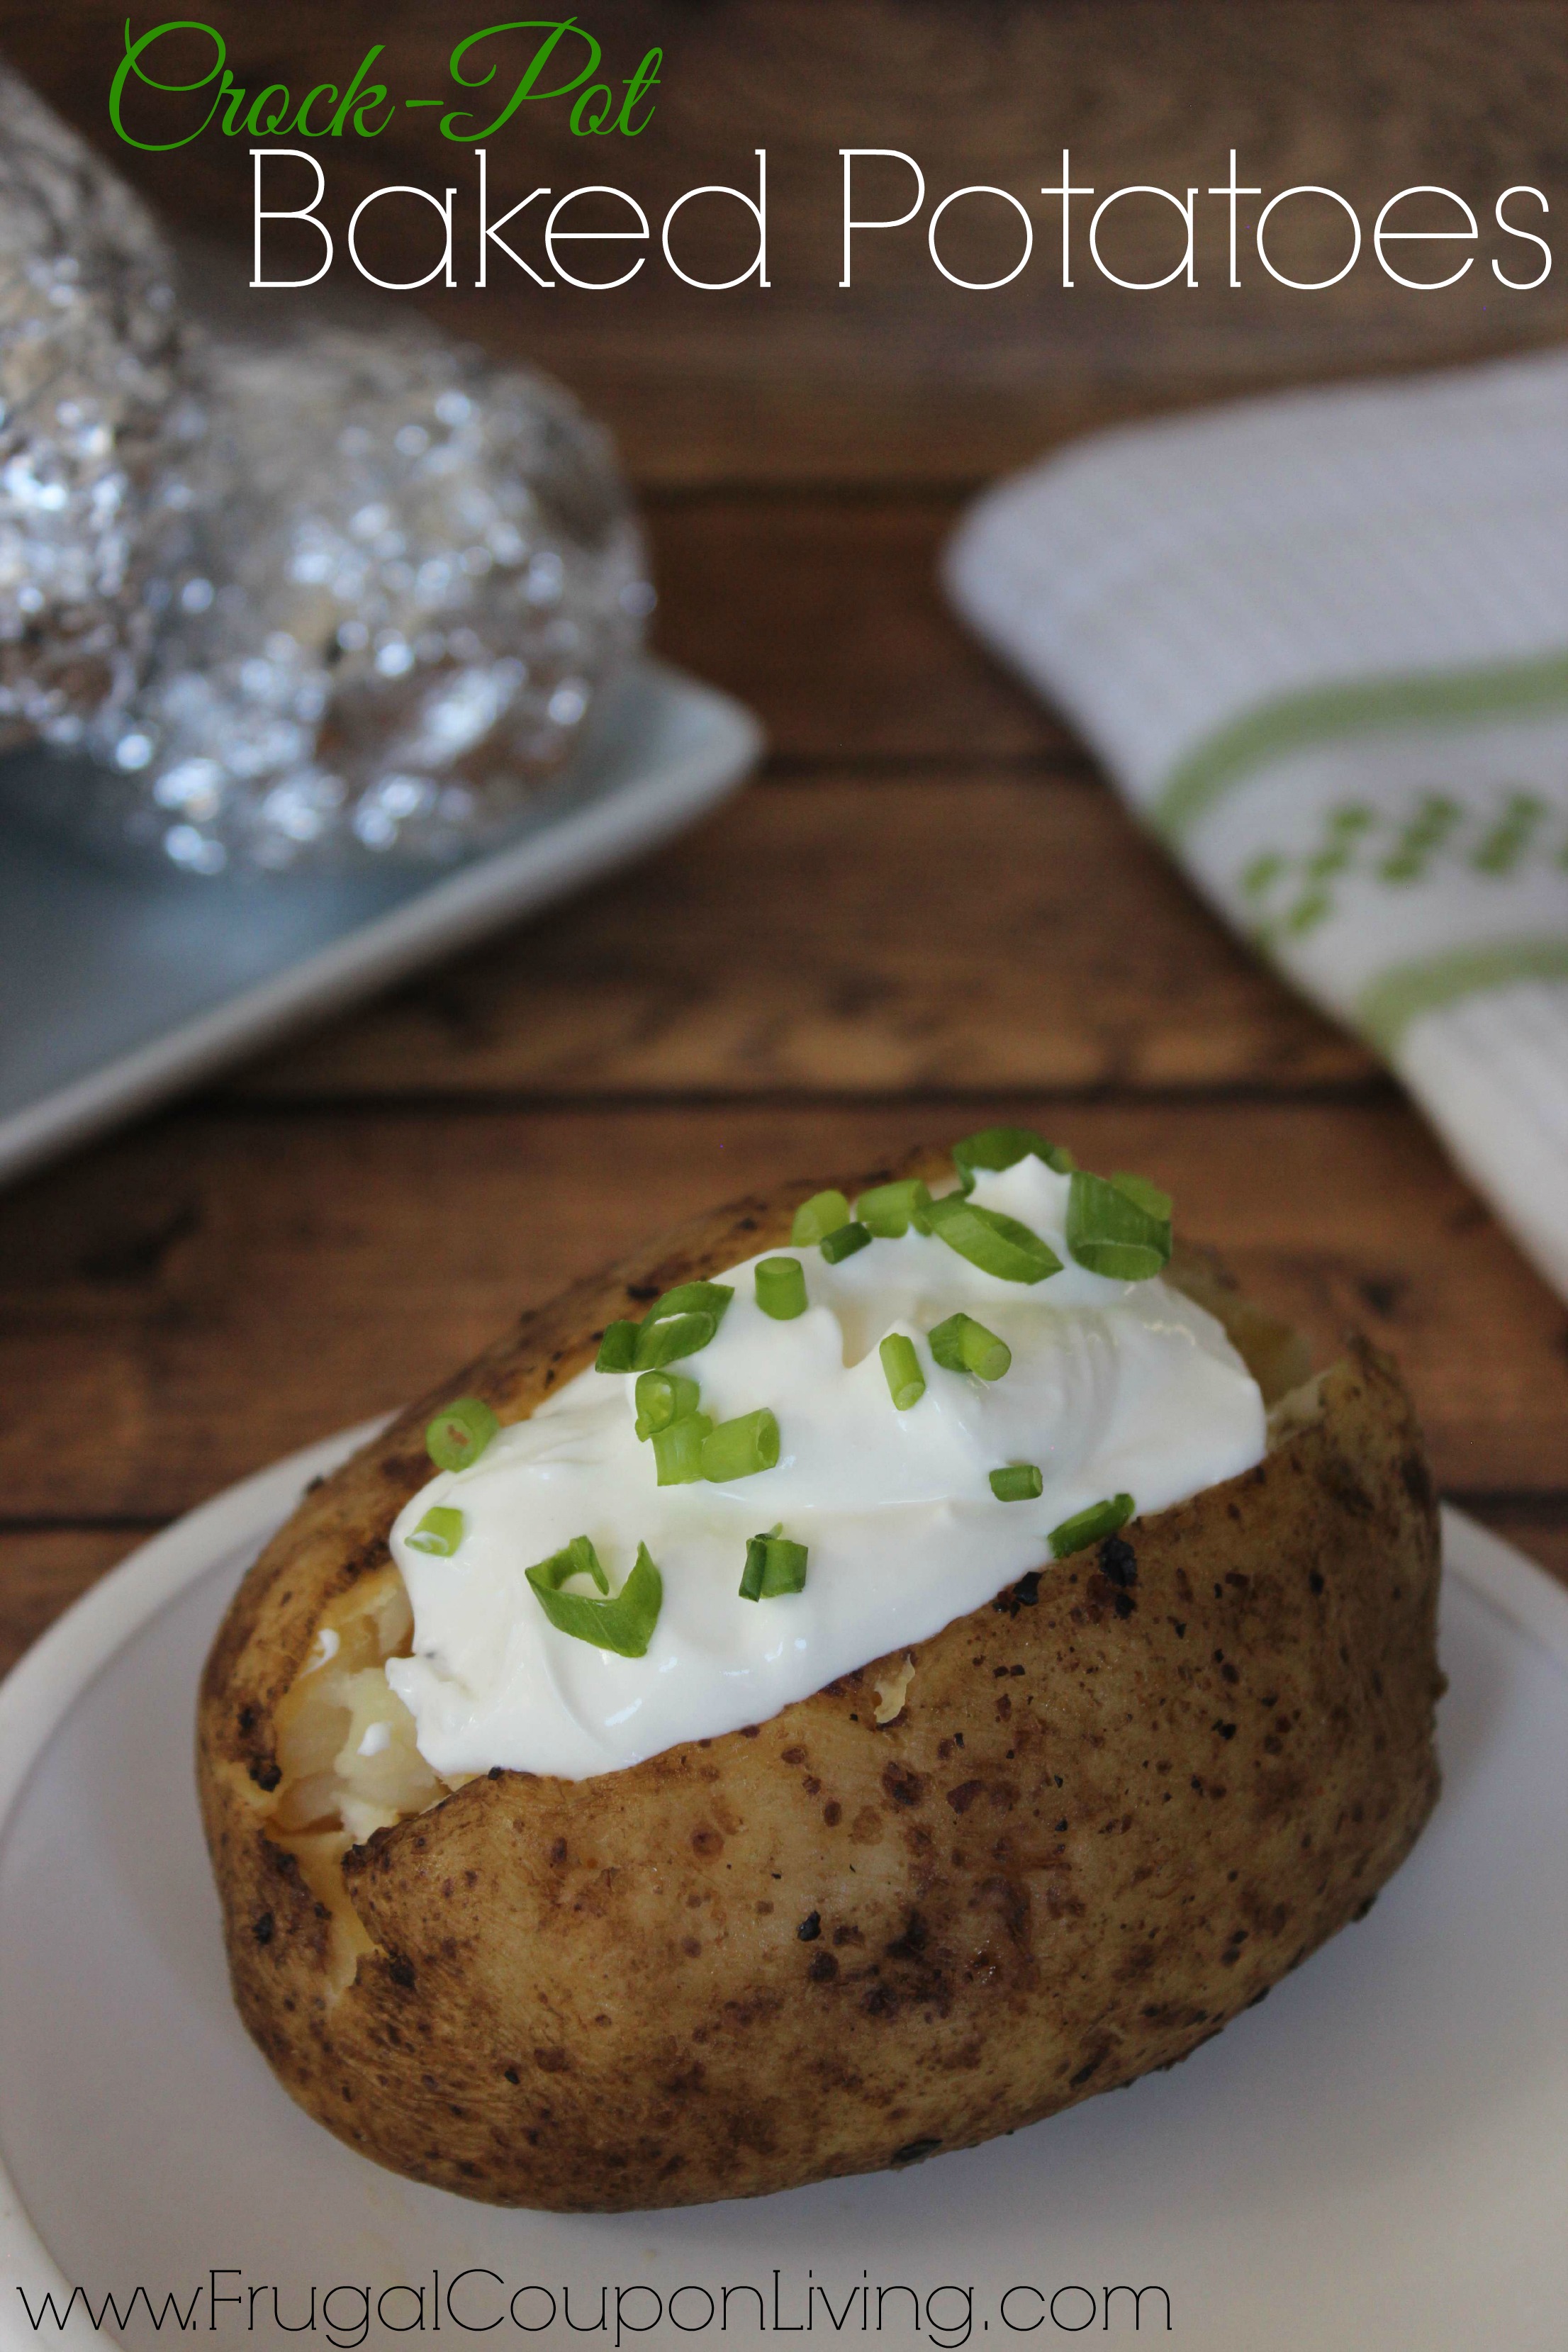 Crock-Pot Baked Potatoes | Easy Slow Cooker Recipe